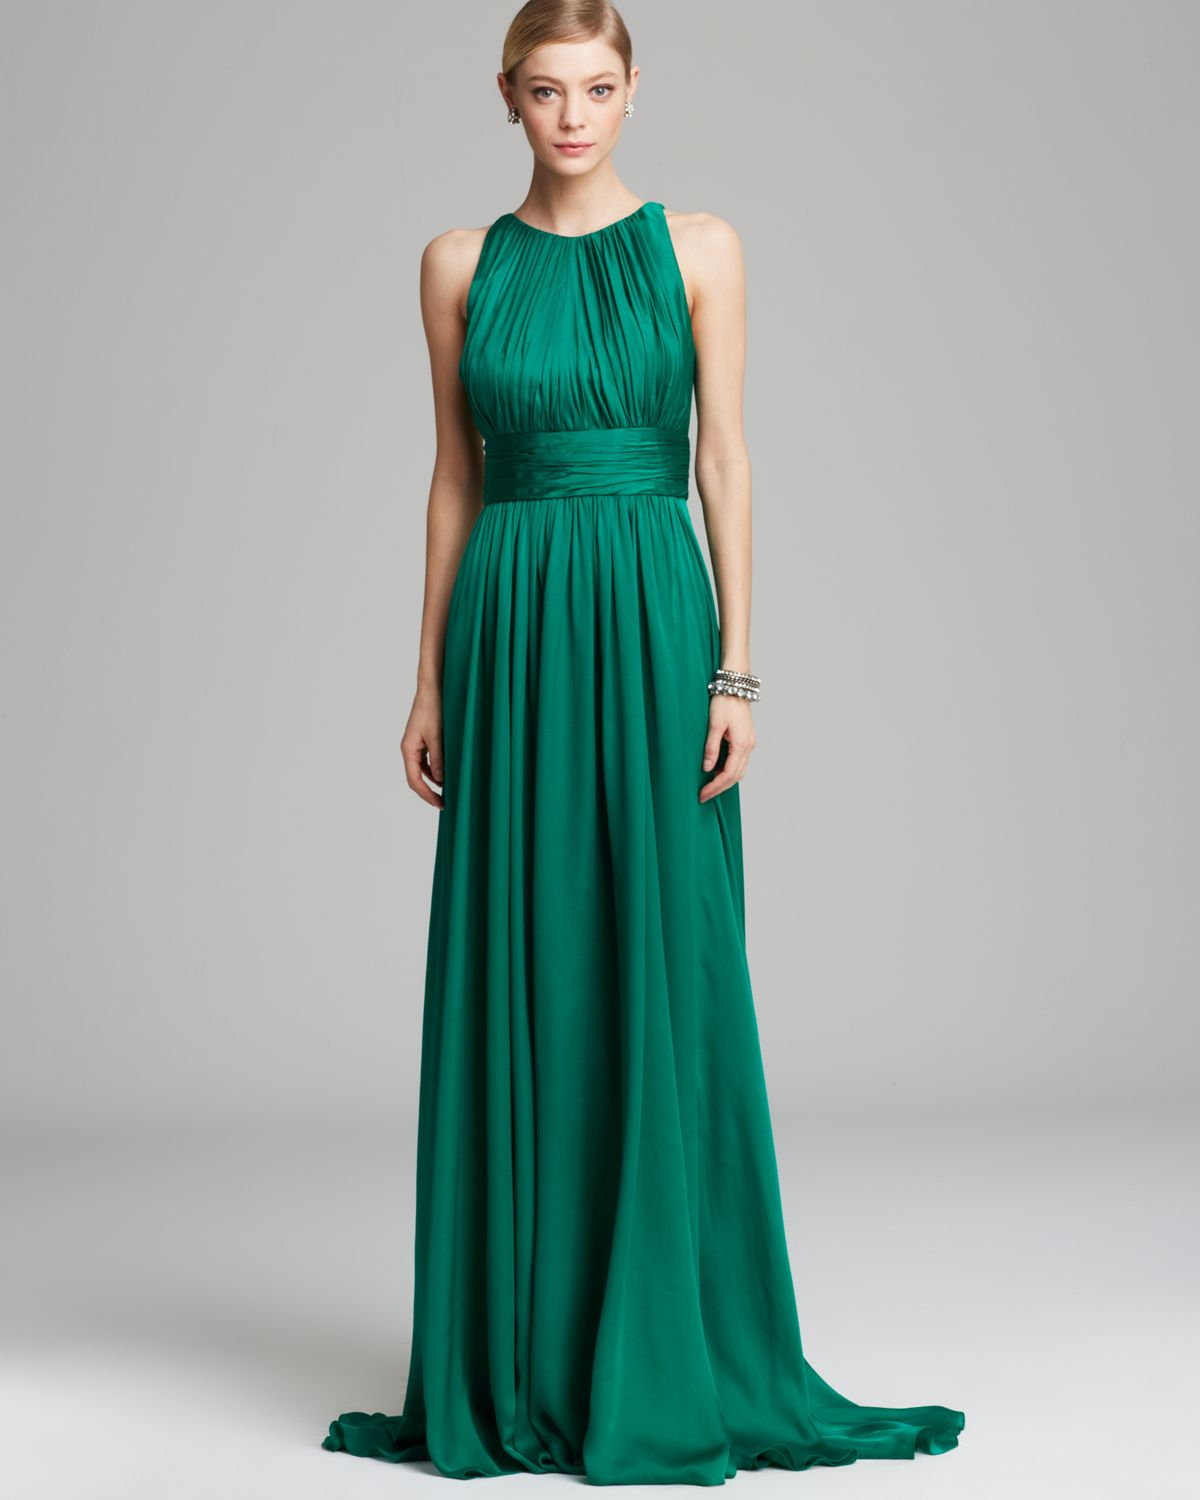 Lyst - Badgley Mischka Gown - Sleeveless Draped Satin in Green1200 x 1500